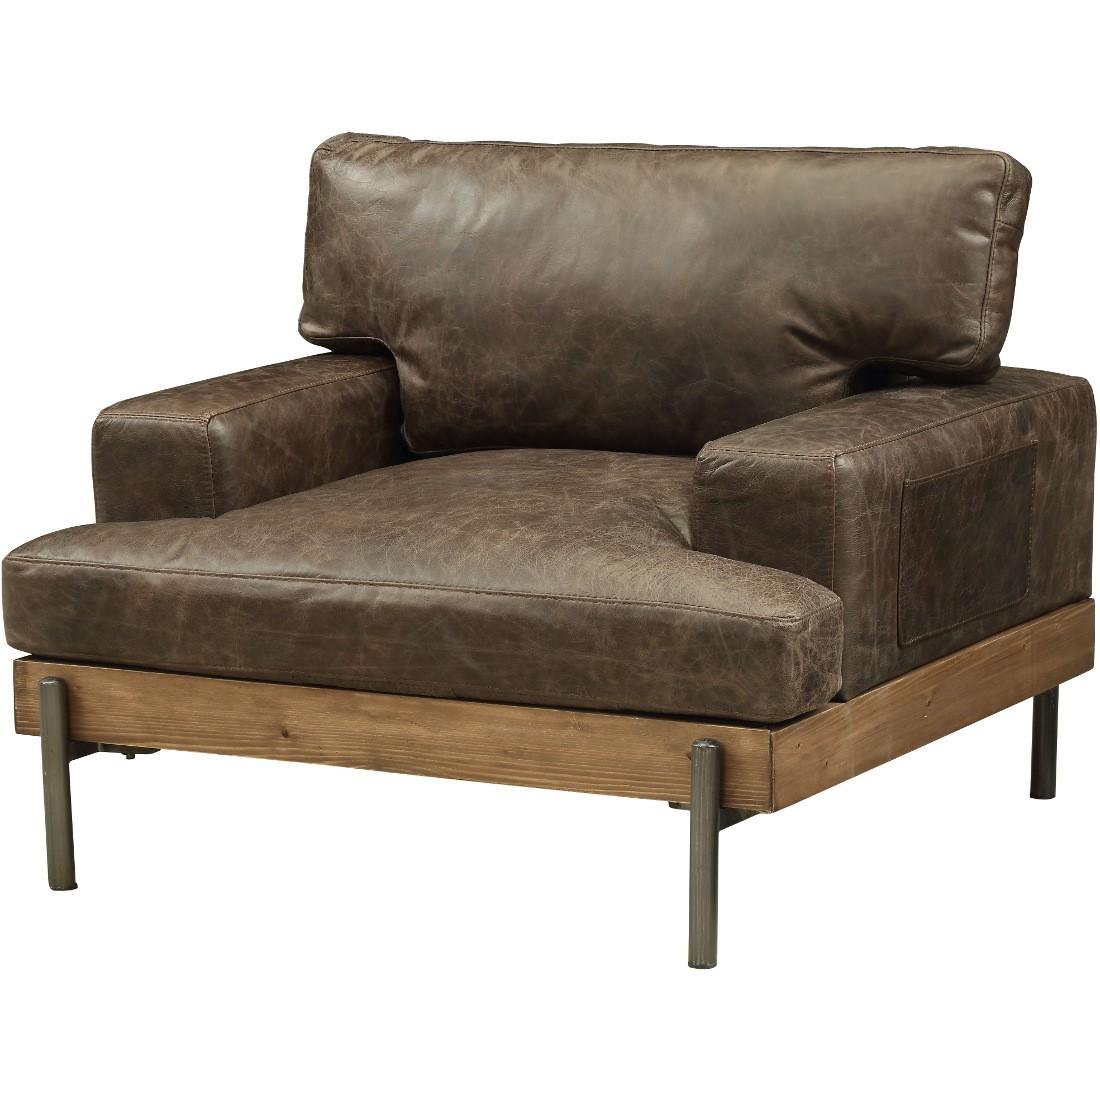 Vintage Oversized Chair SKU: W002554435 SKU: W002554435 in Brown, Chocolate, Oak Top grain leather